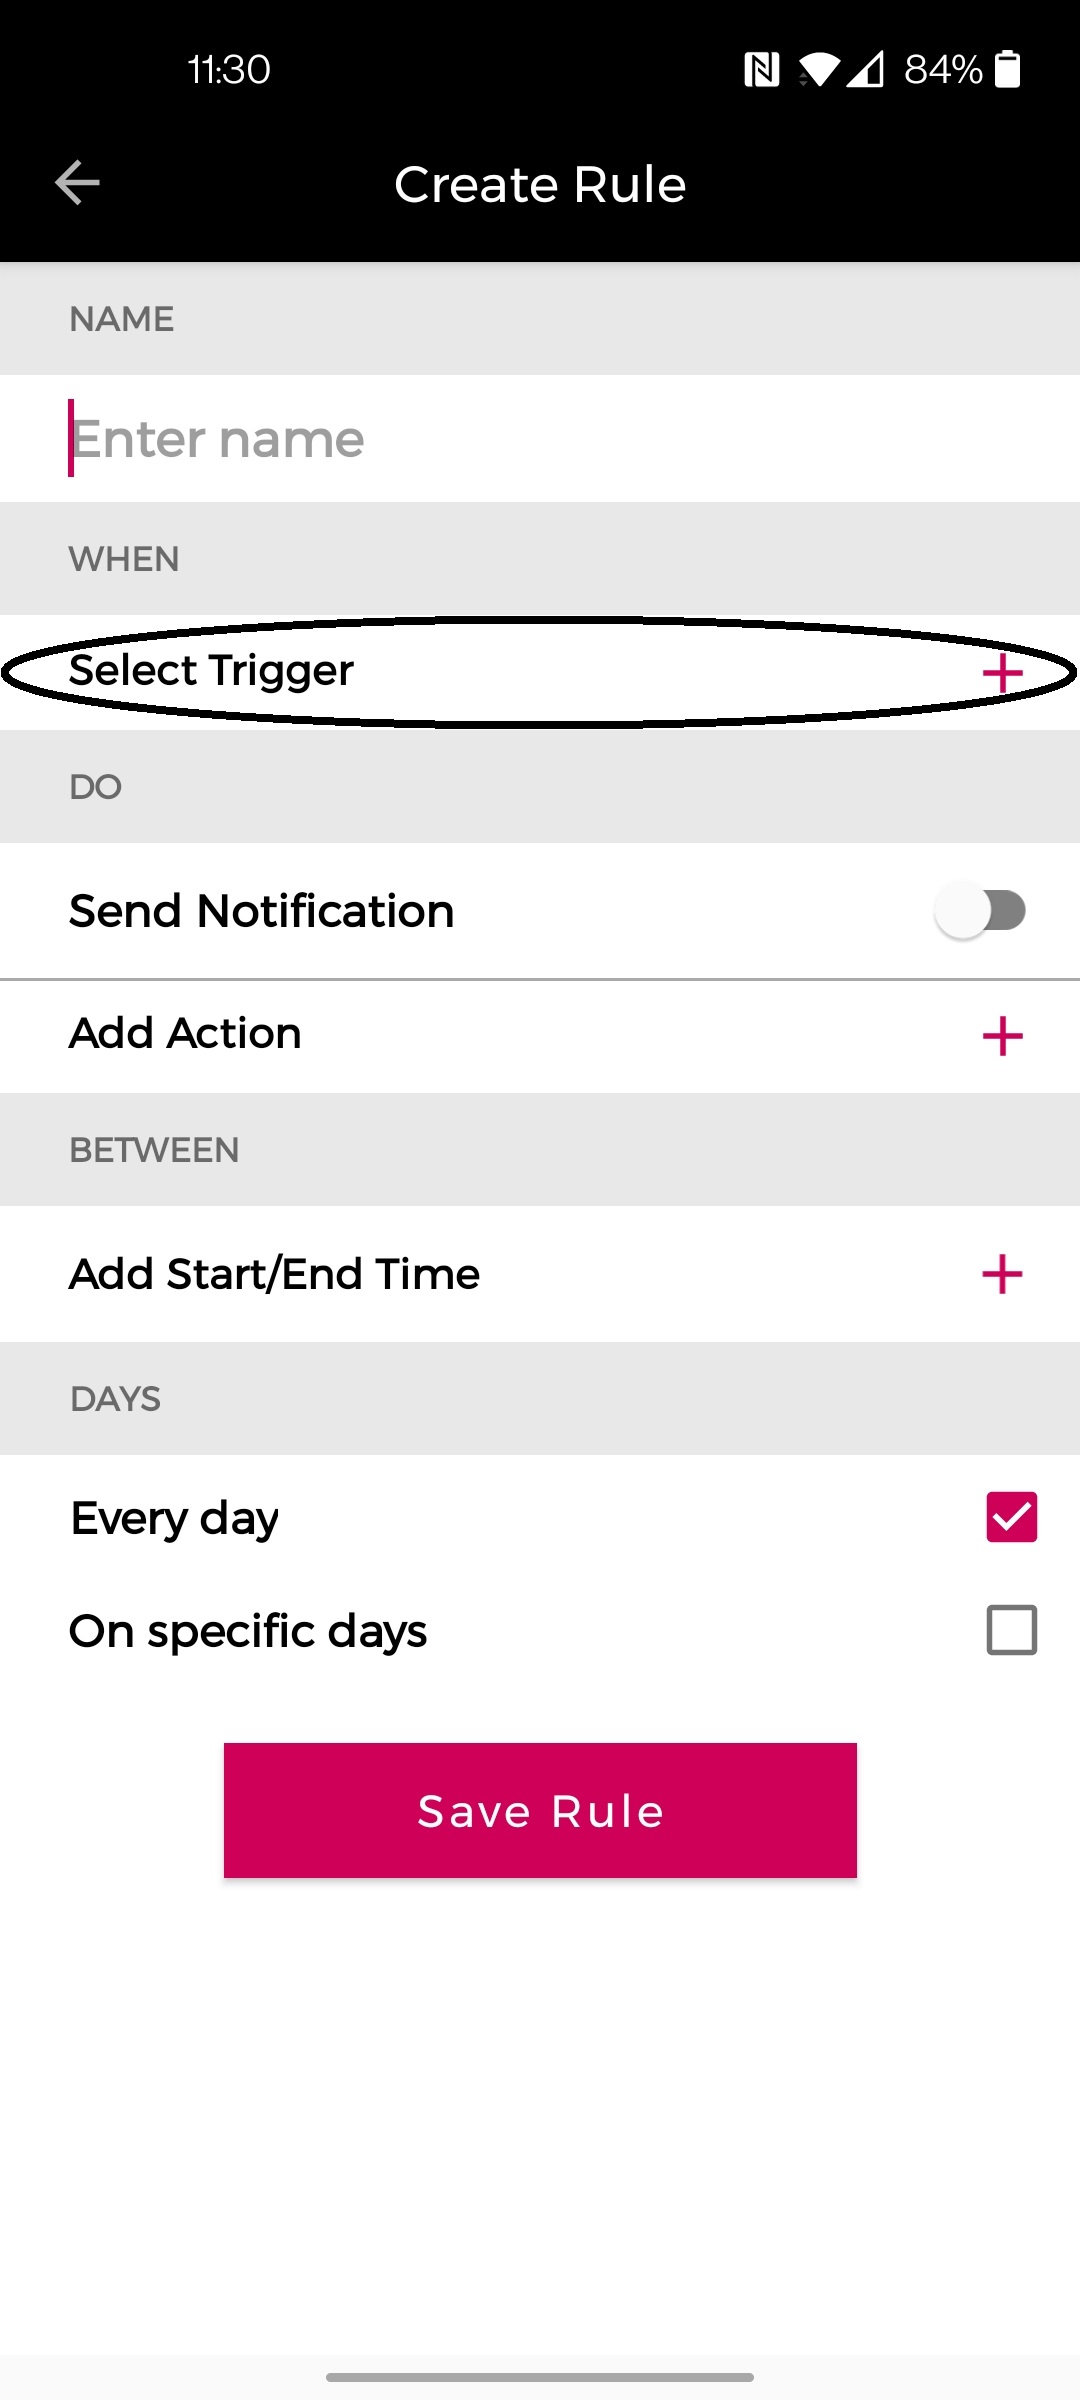 Create Rule - Select Trigger